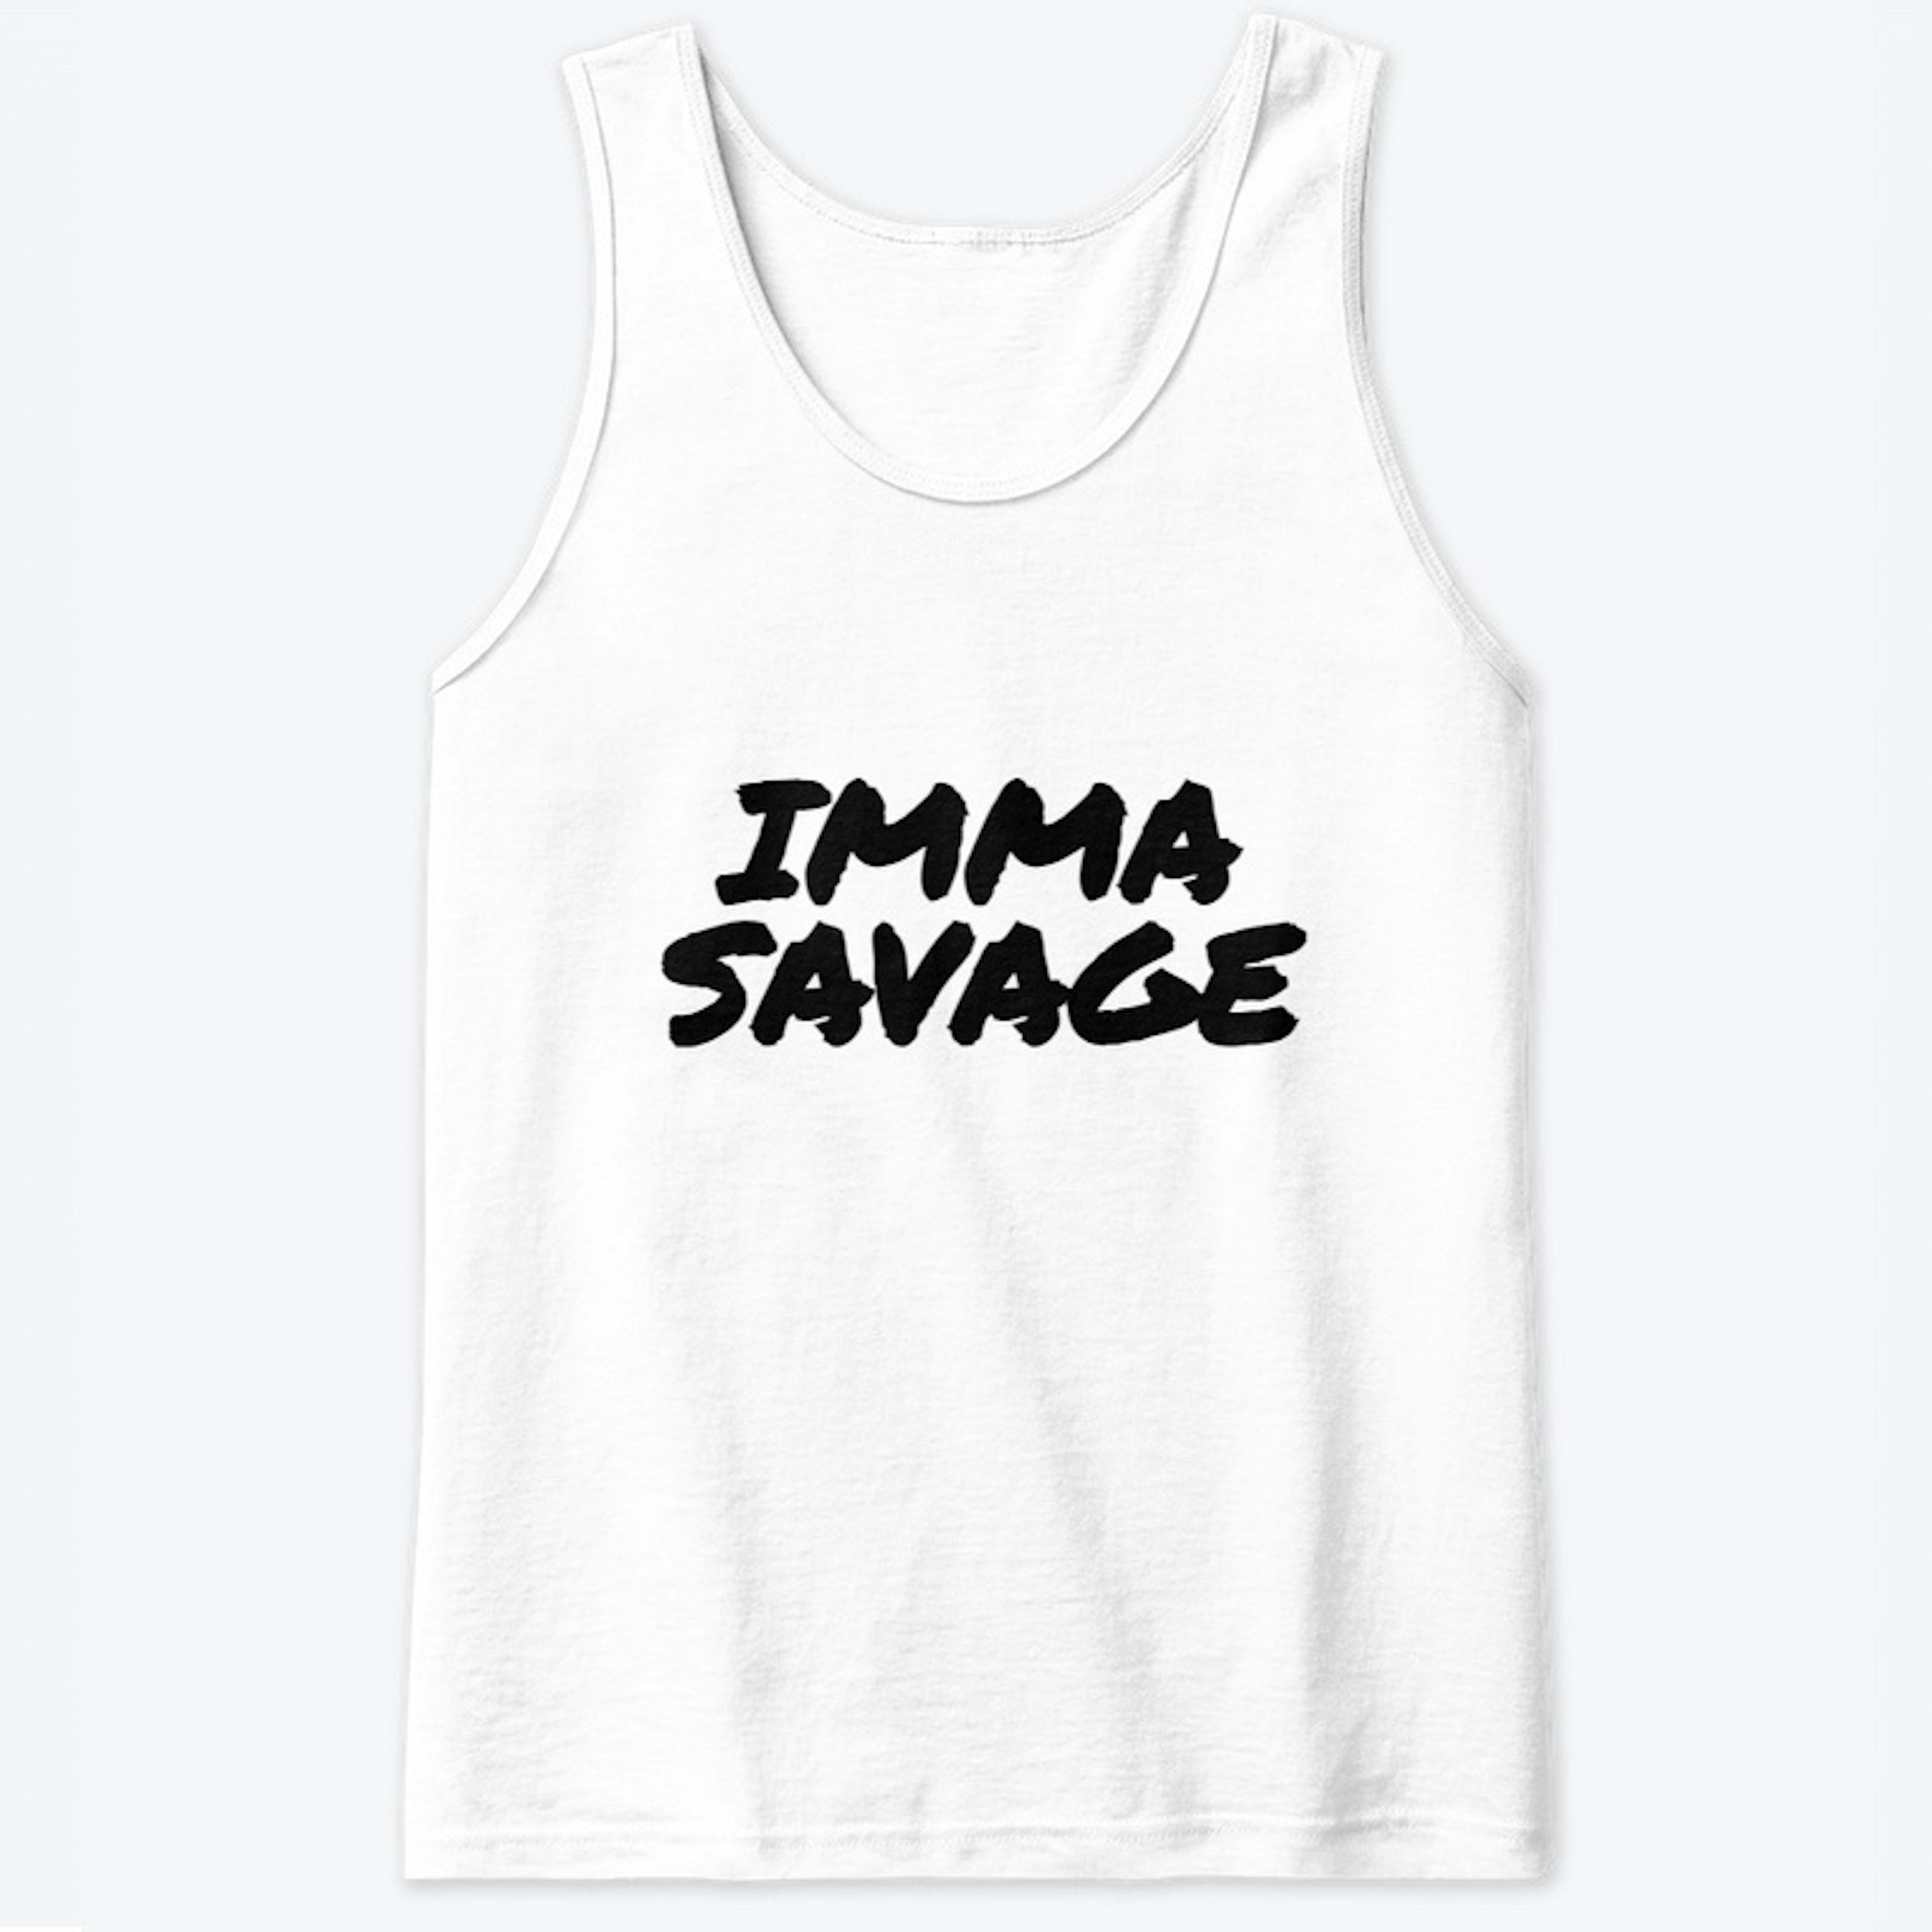 Imma Savage Men's Tank Top